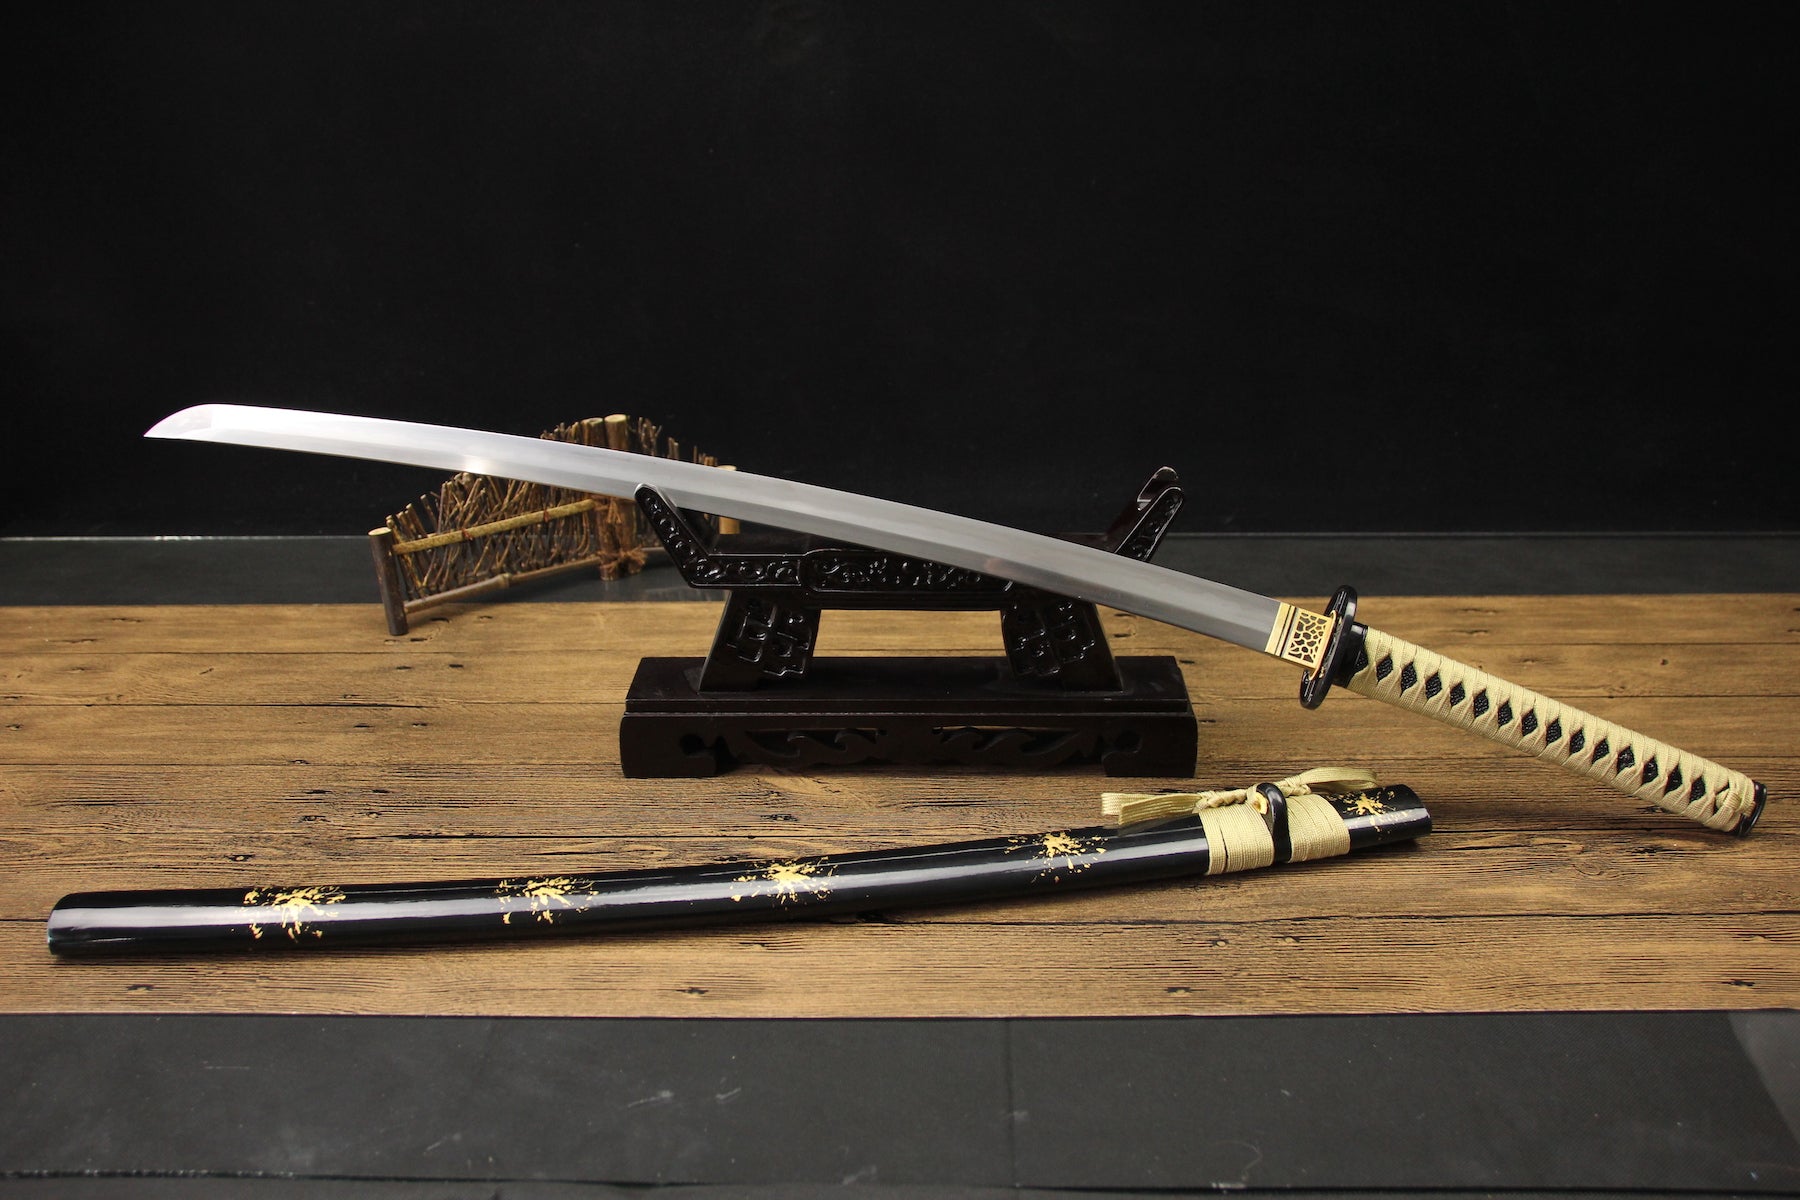 Hand Forged Myoho Muramasa Japanese Samurai Sword with Hand Carved Saya  Folded Steel Clay Tempered